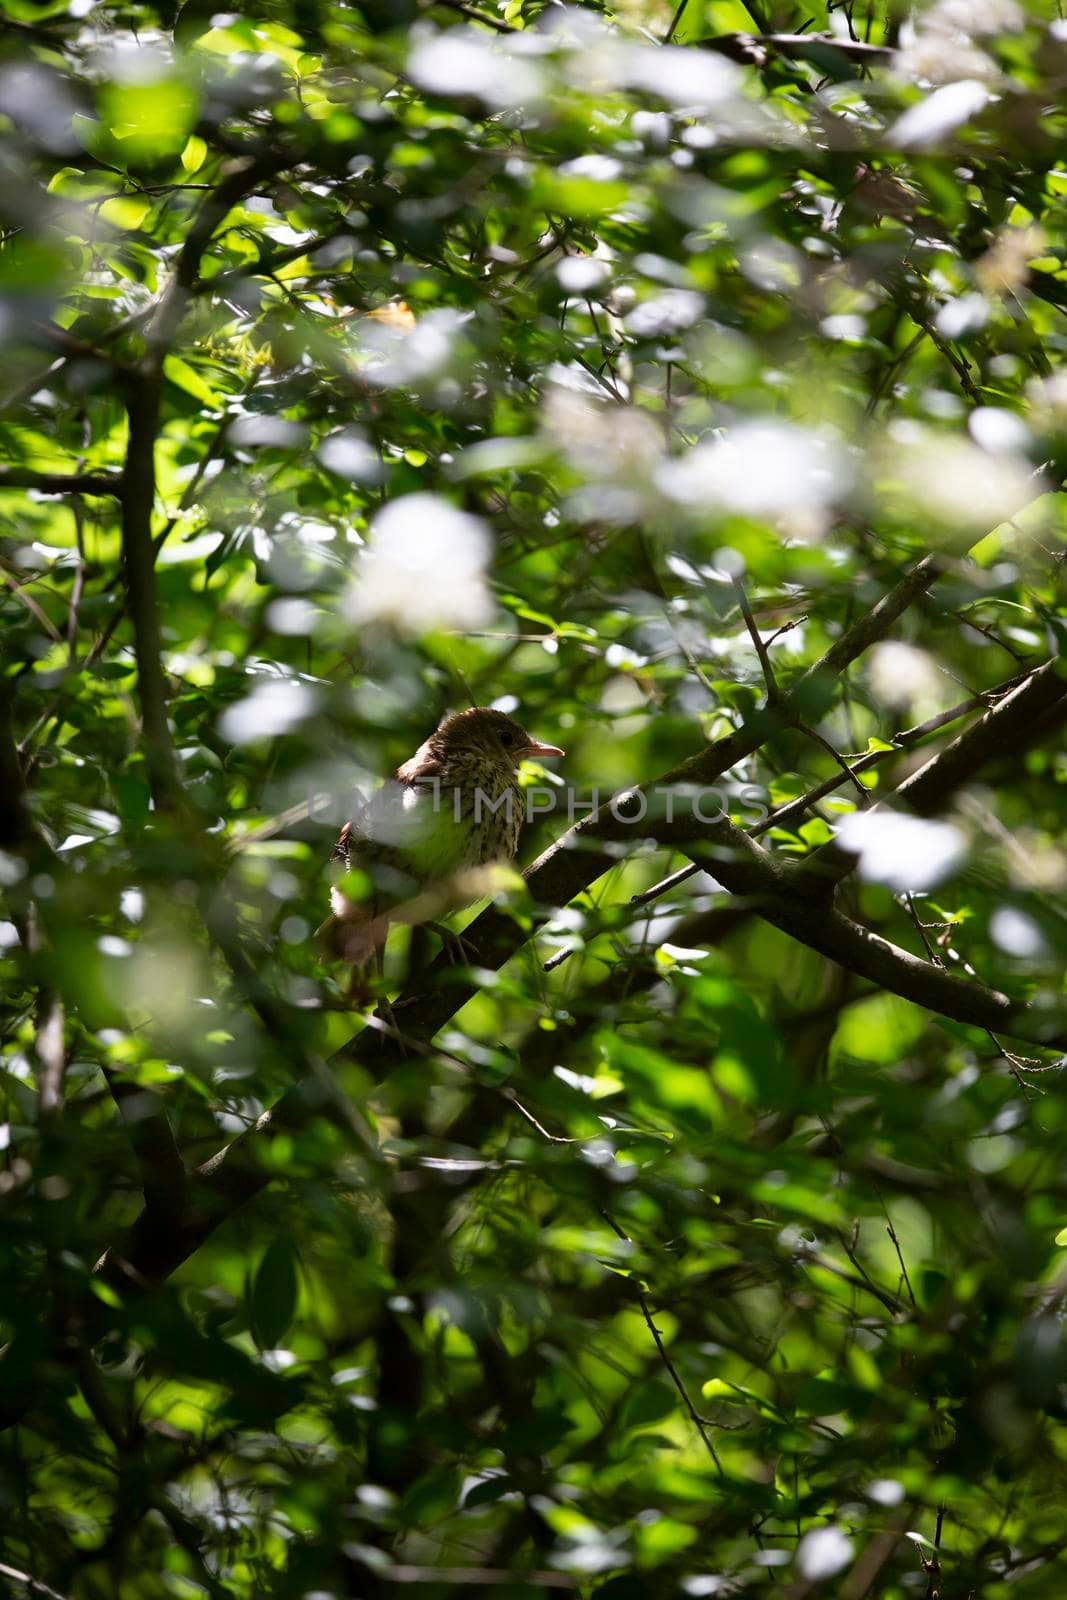 Juvenile Brown Thrasher Bird in a Bush by tornado98